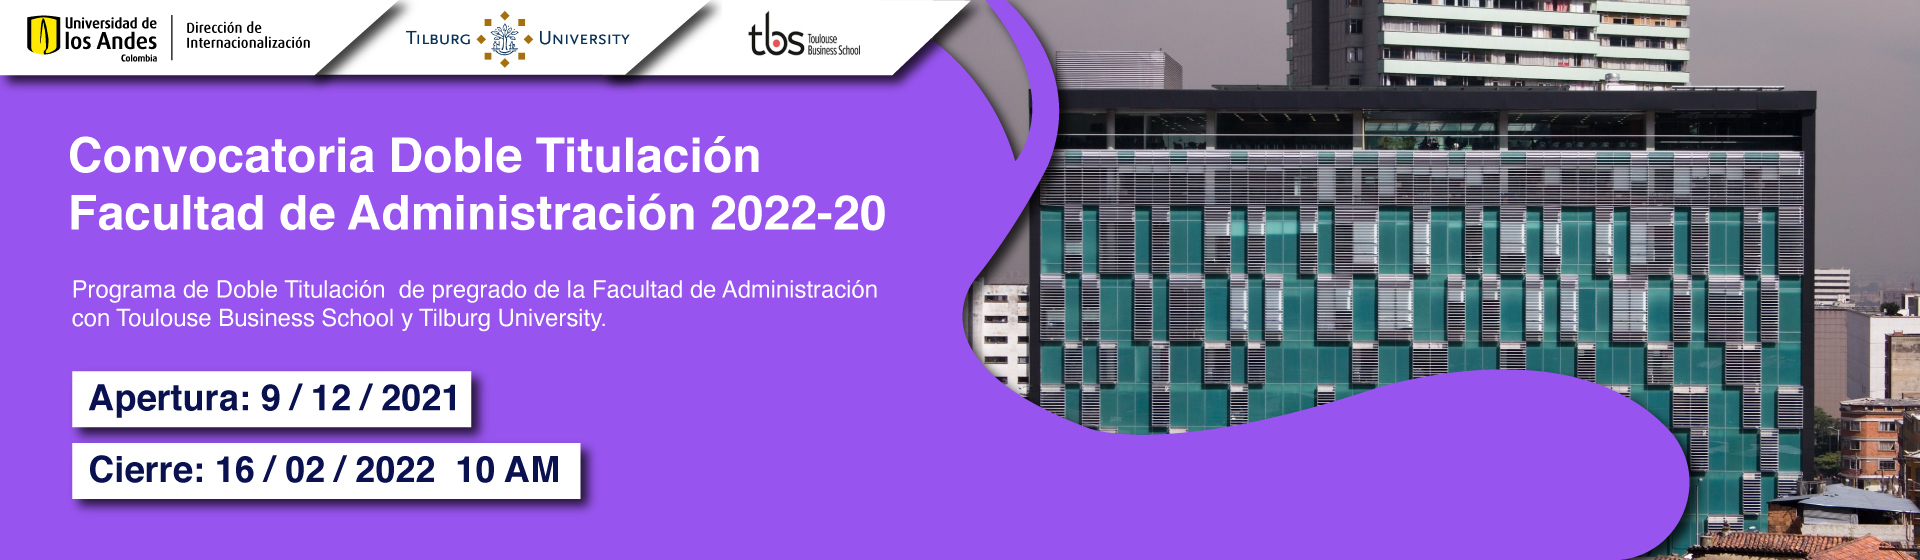 Convocatoria Doble Titulación Facultad de Administración 2022-20